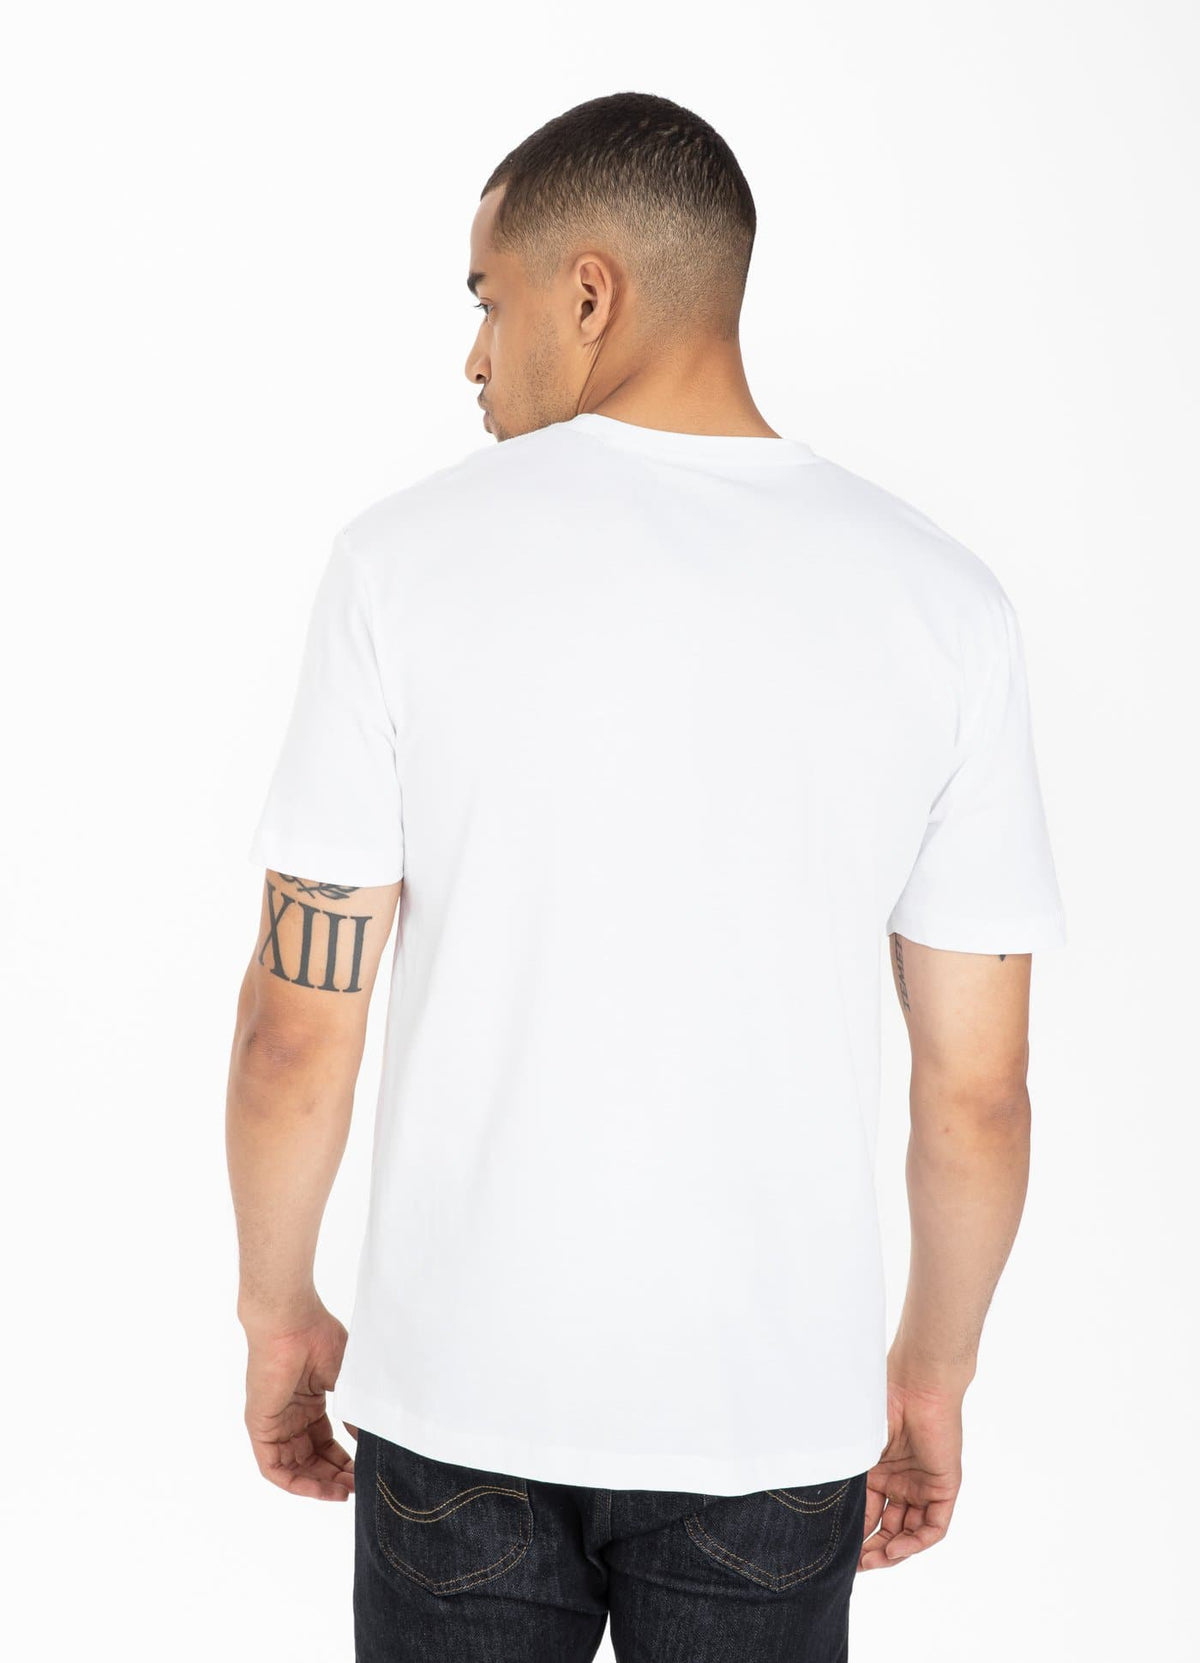 T-Shirt SMALL LOGO 21 White - Pitbull West Coast International Store 